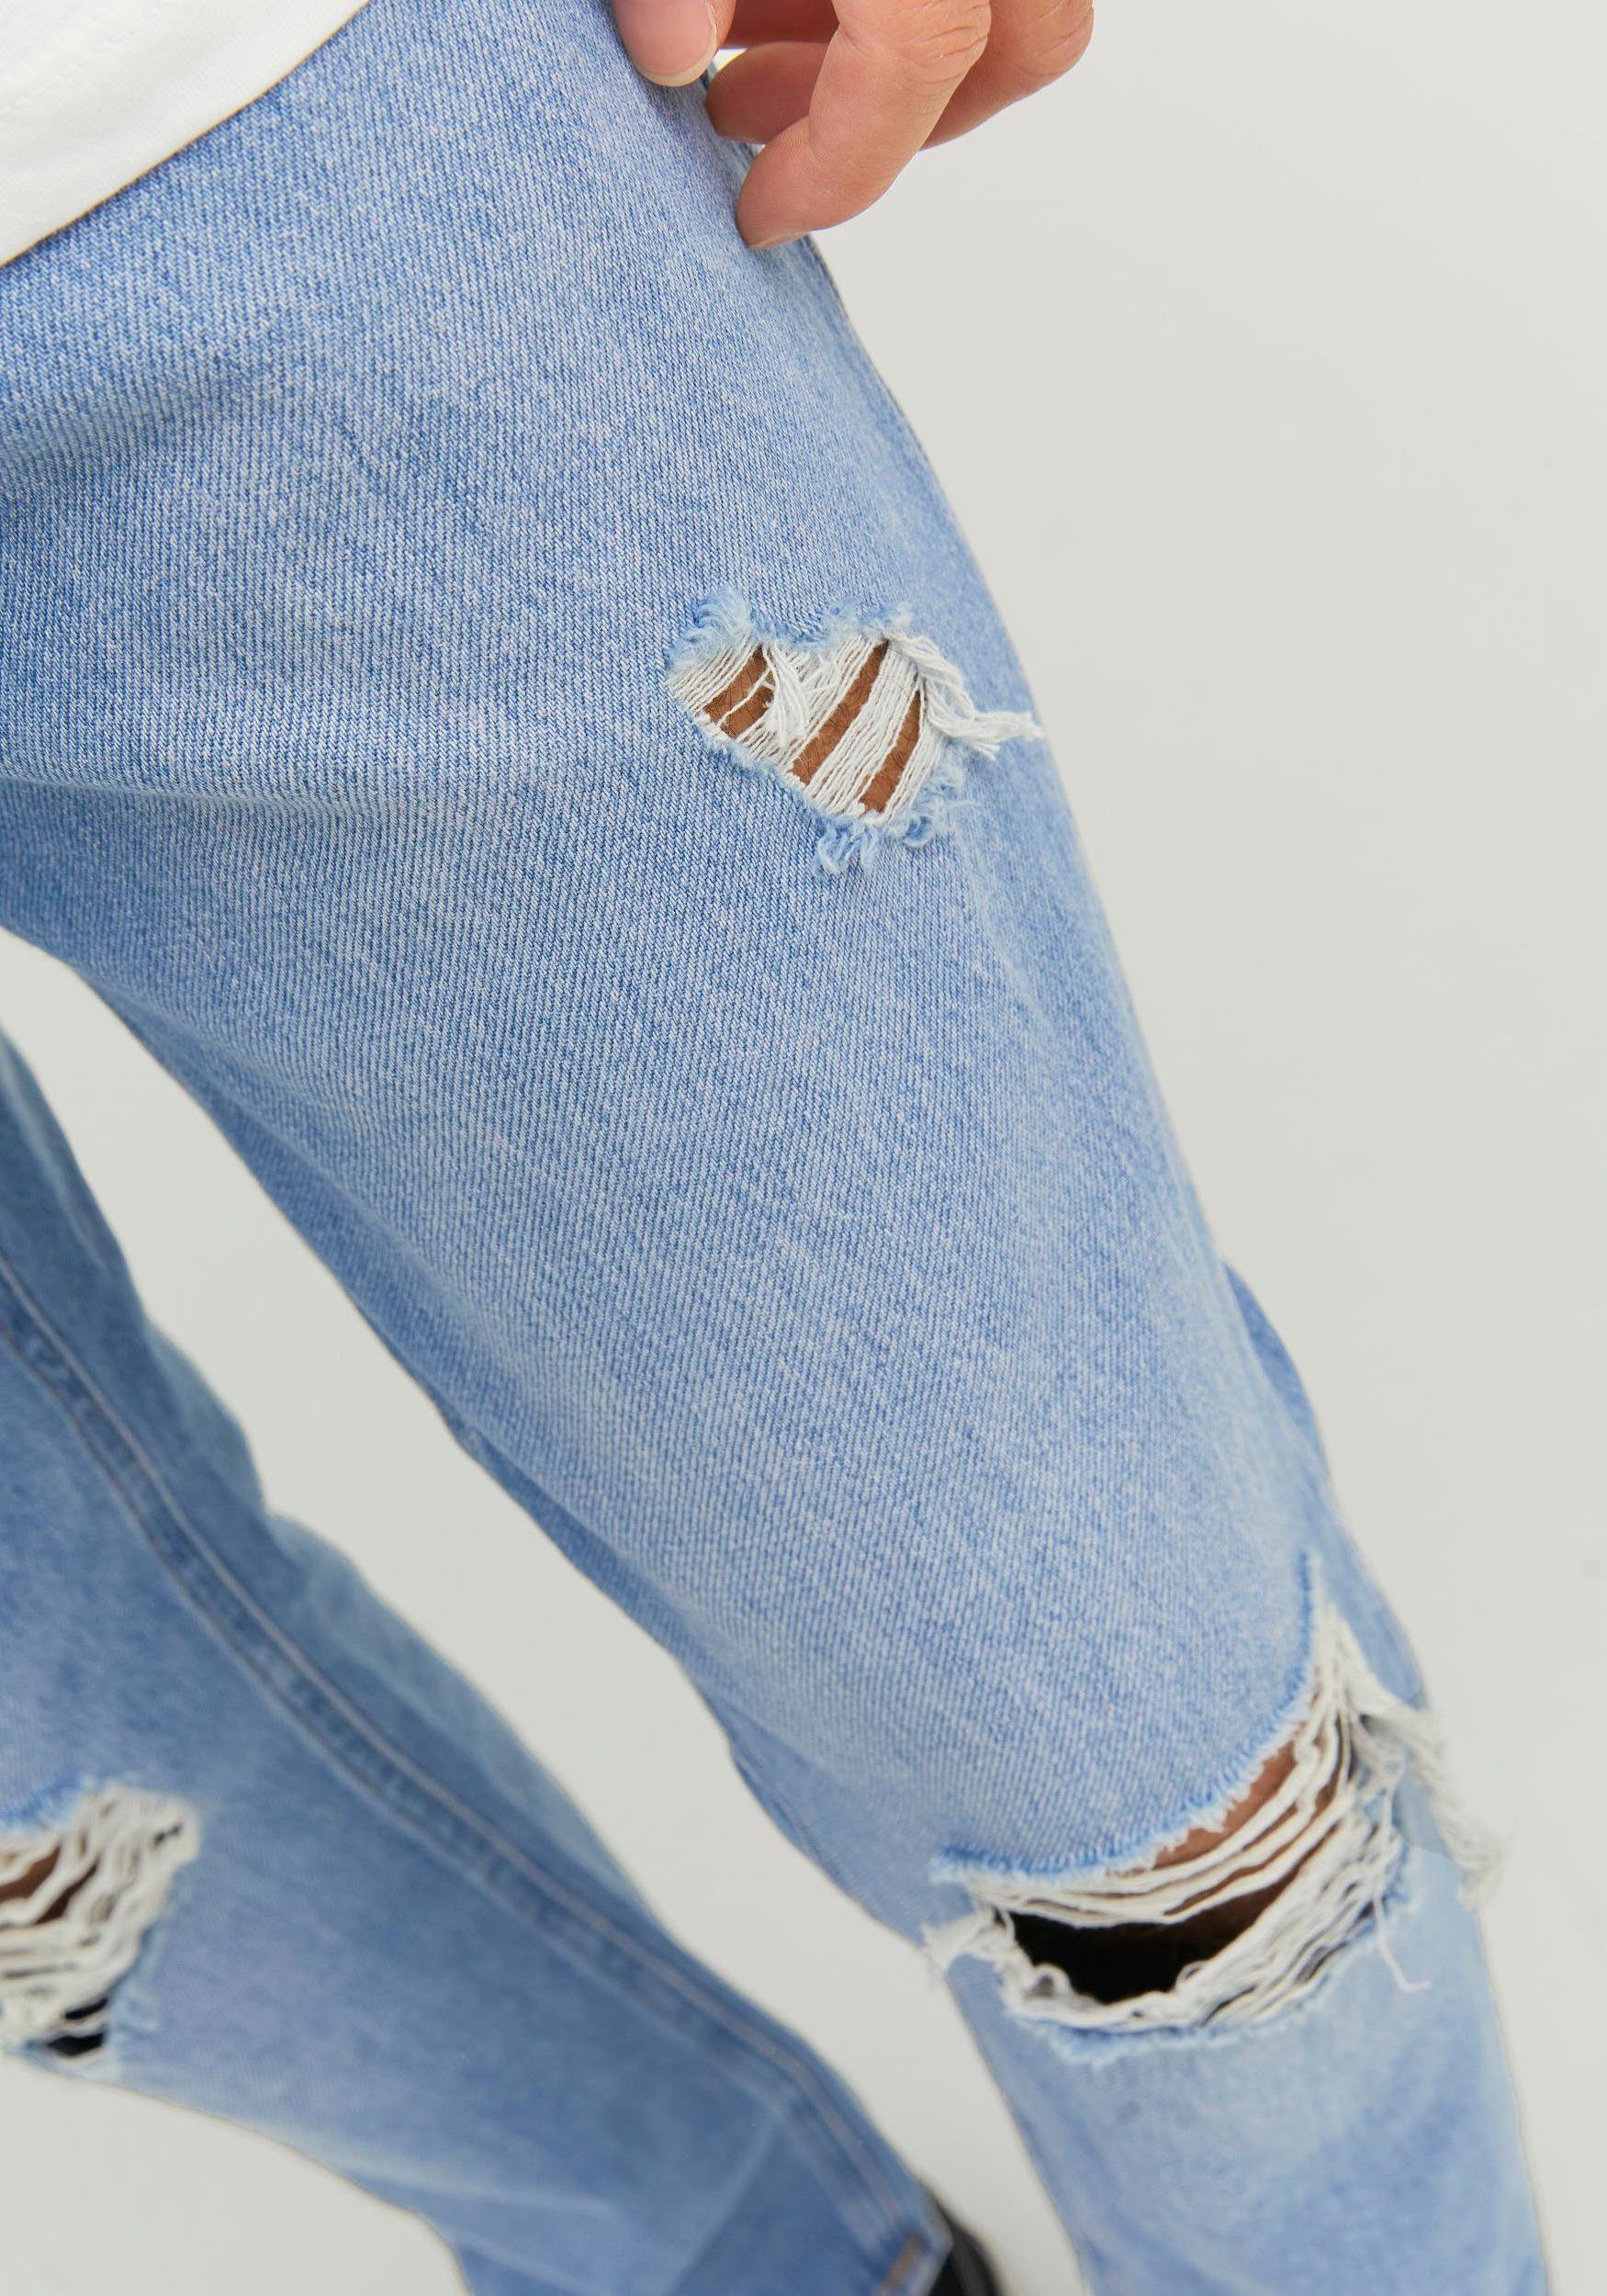 CROPPED JJIFRANK Tapered-fit-Jeans & Jack Jones JJORIGINAL light-blue-denim